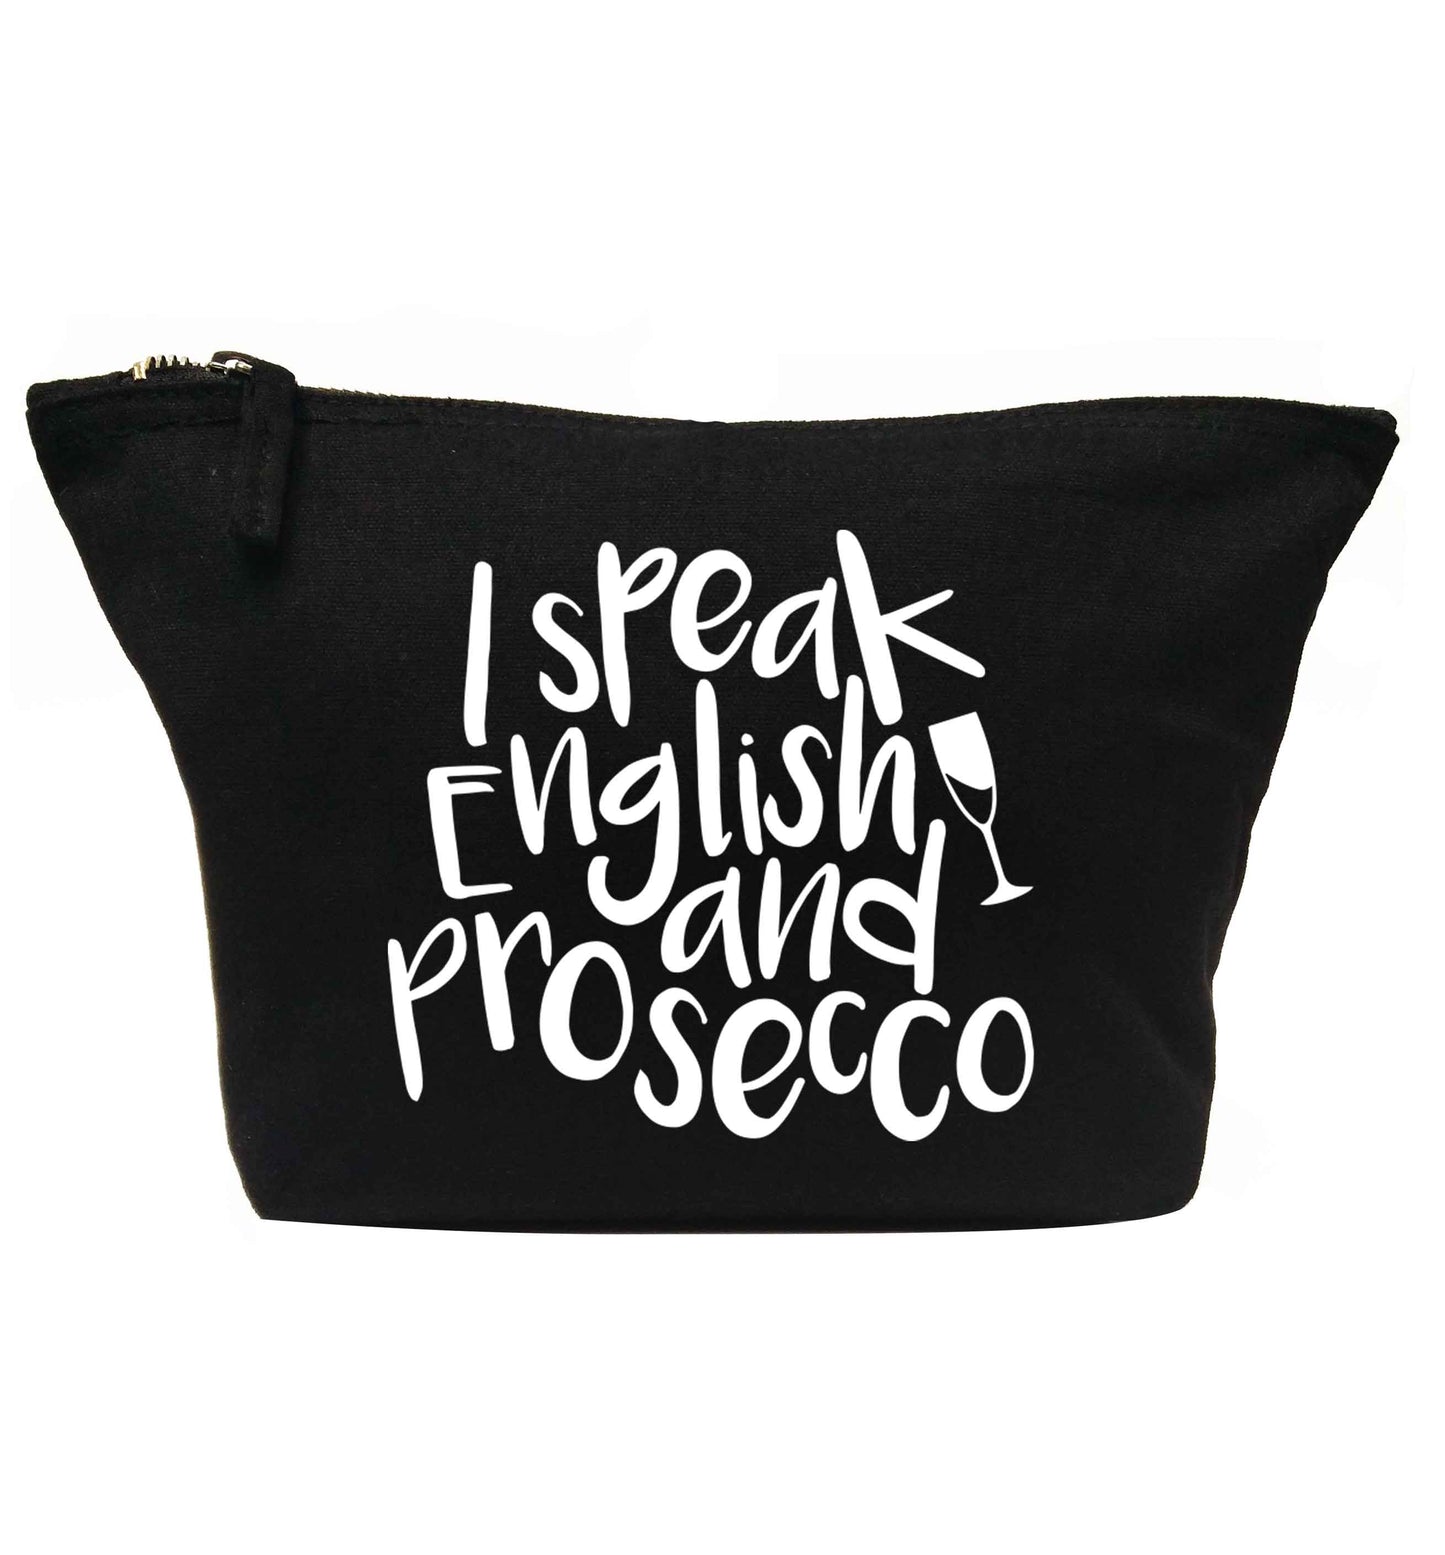 I speak English and prosecco | makeup / wash bag